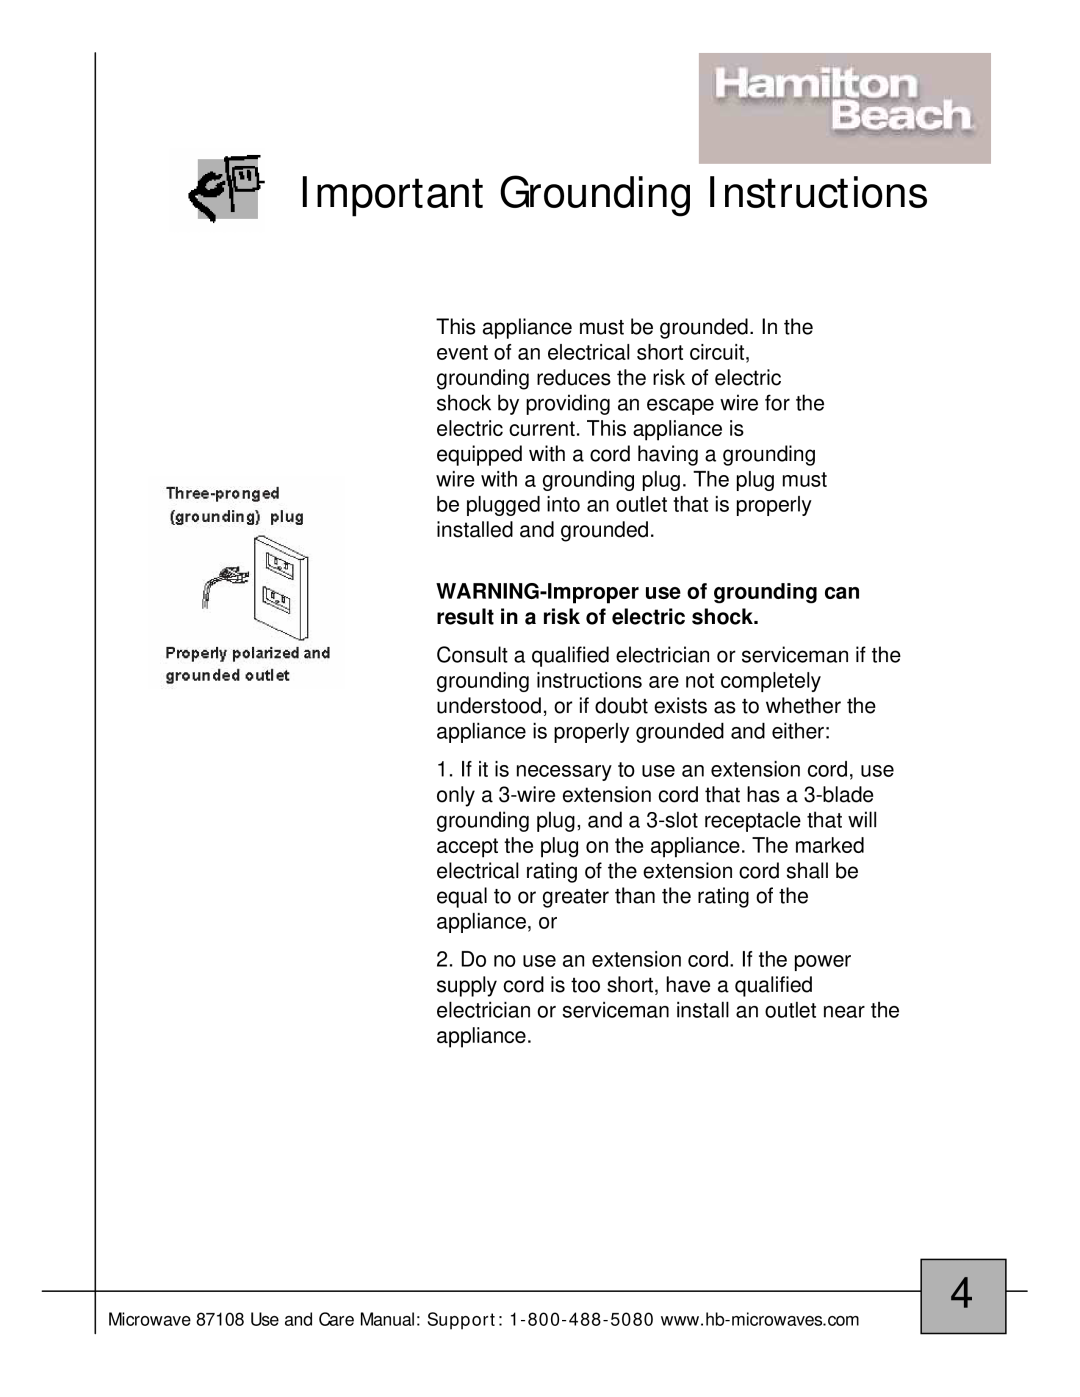 Hamilton Beach 87108 owner manual Important Grounding Instructions 